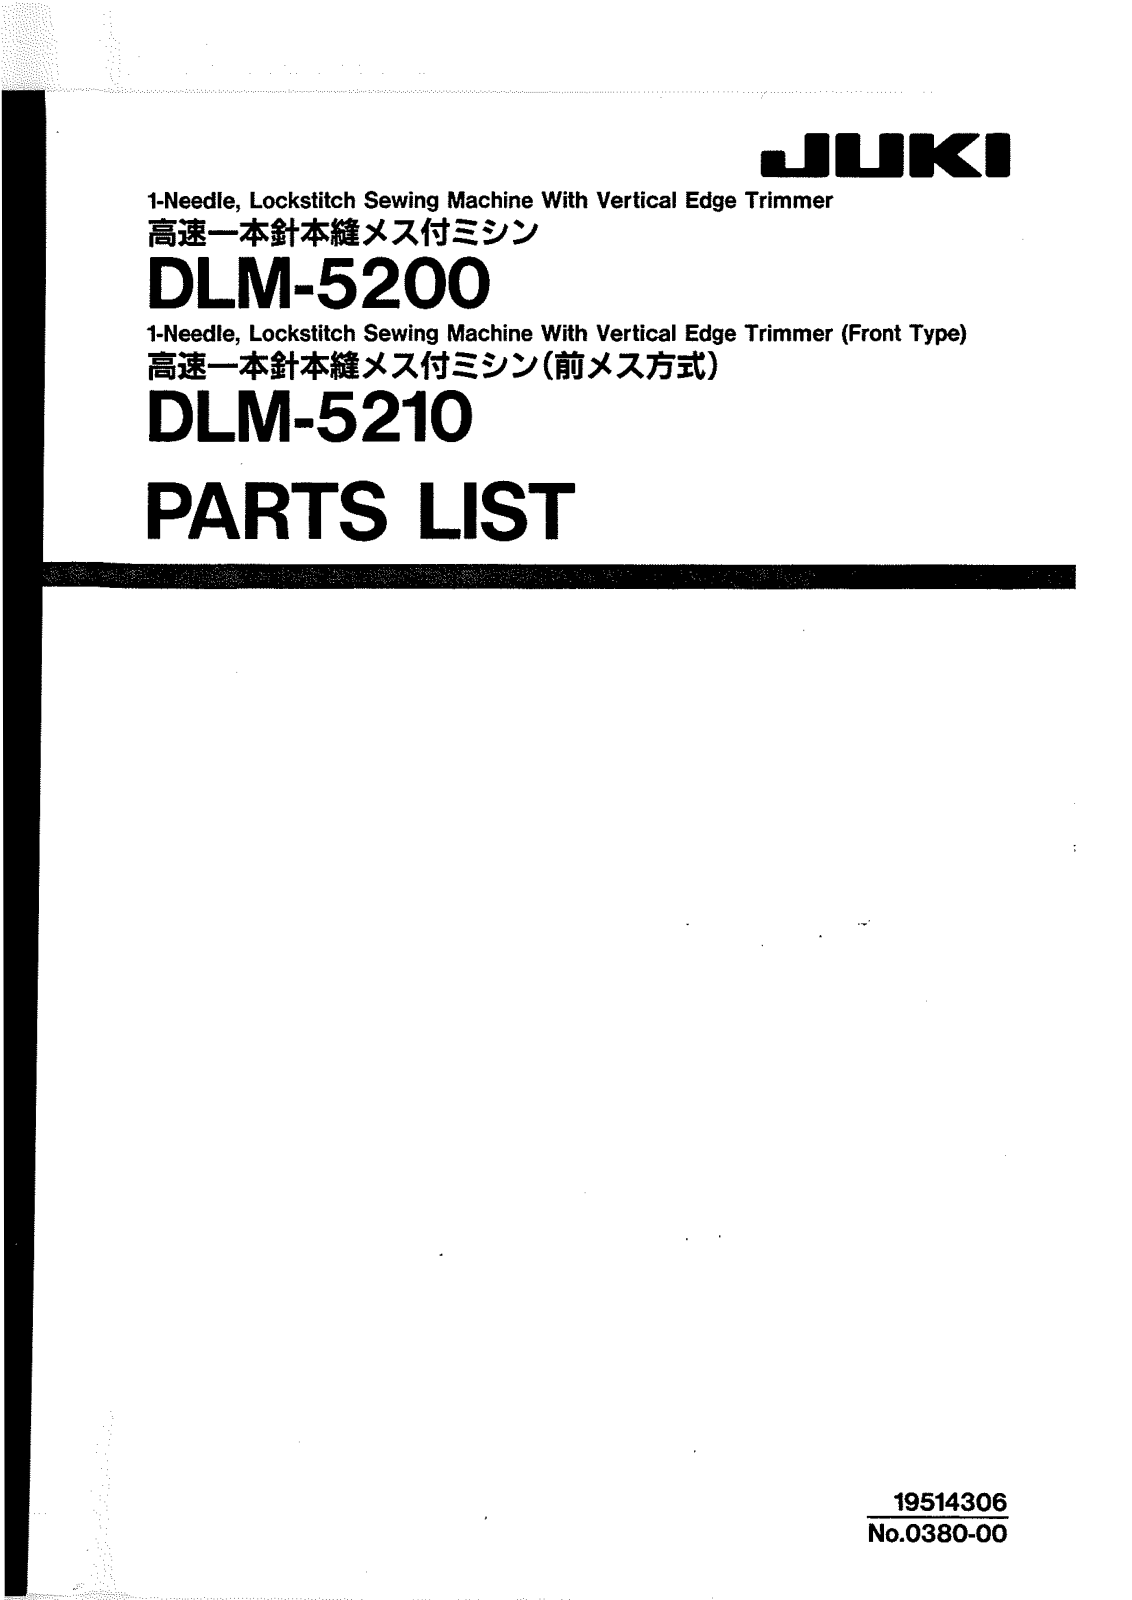 JUKI DLM-5200, DLM-5210 Parts List